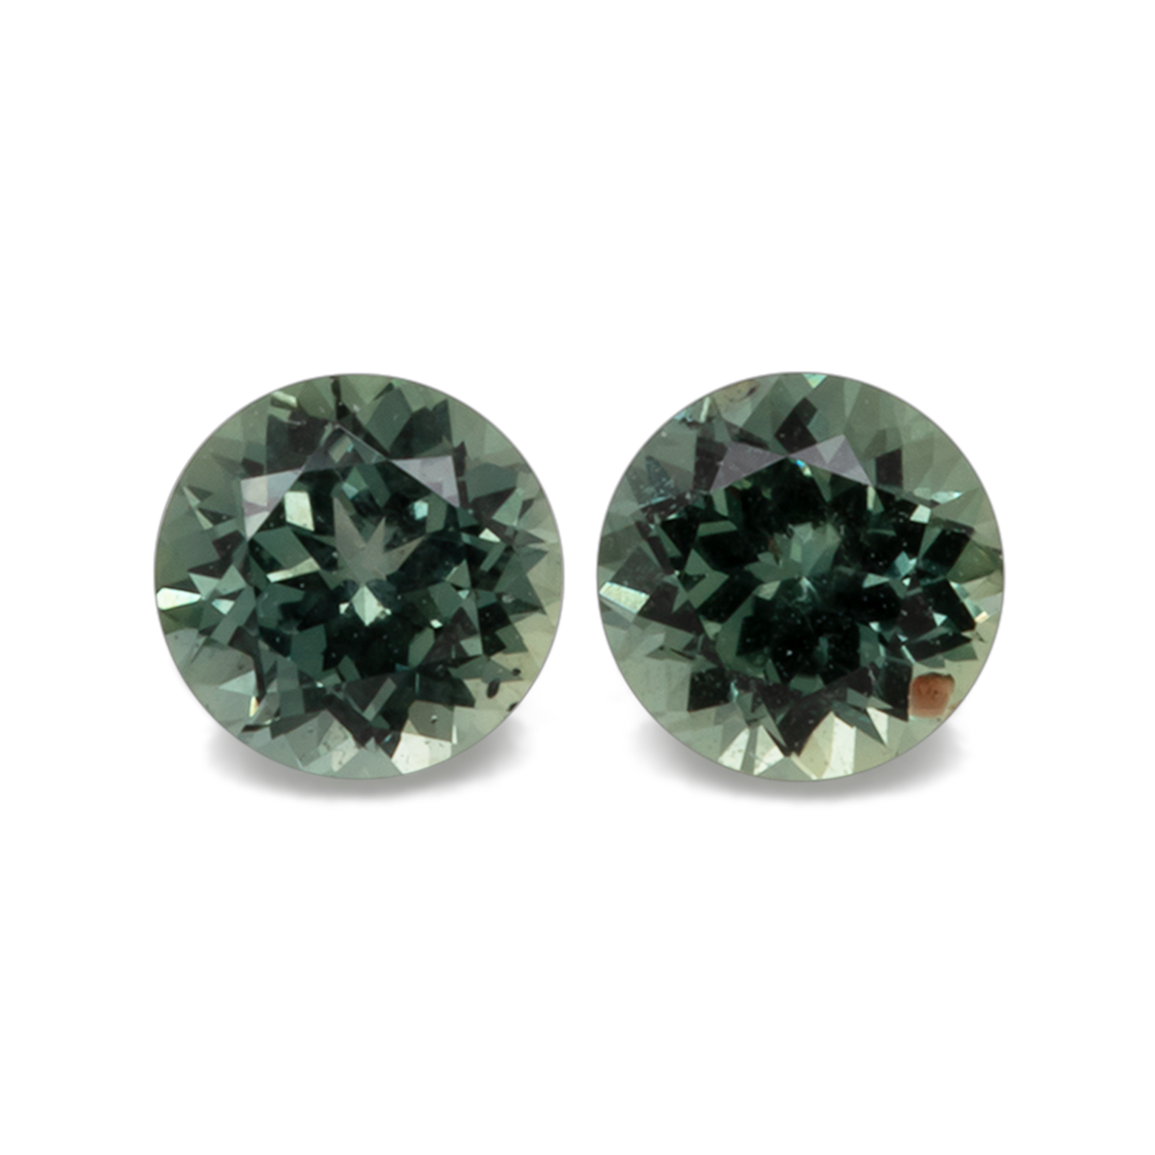 Saphir Paar - grün, rund, 4,1x4,1 mm, 0,67 cts, Nr. XSR11201